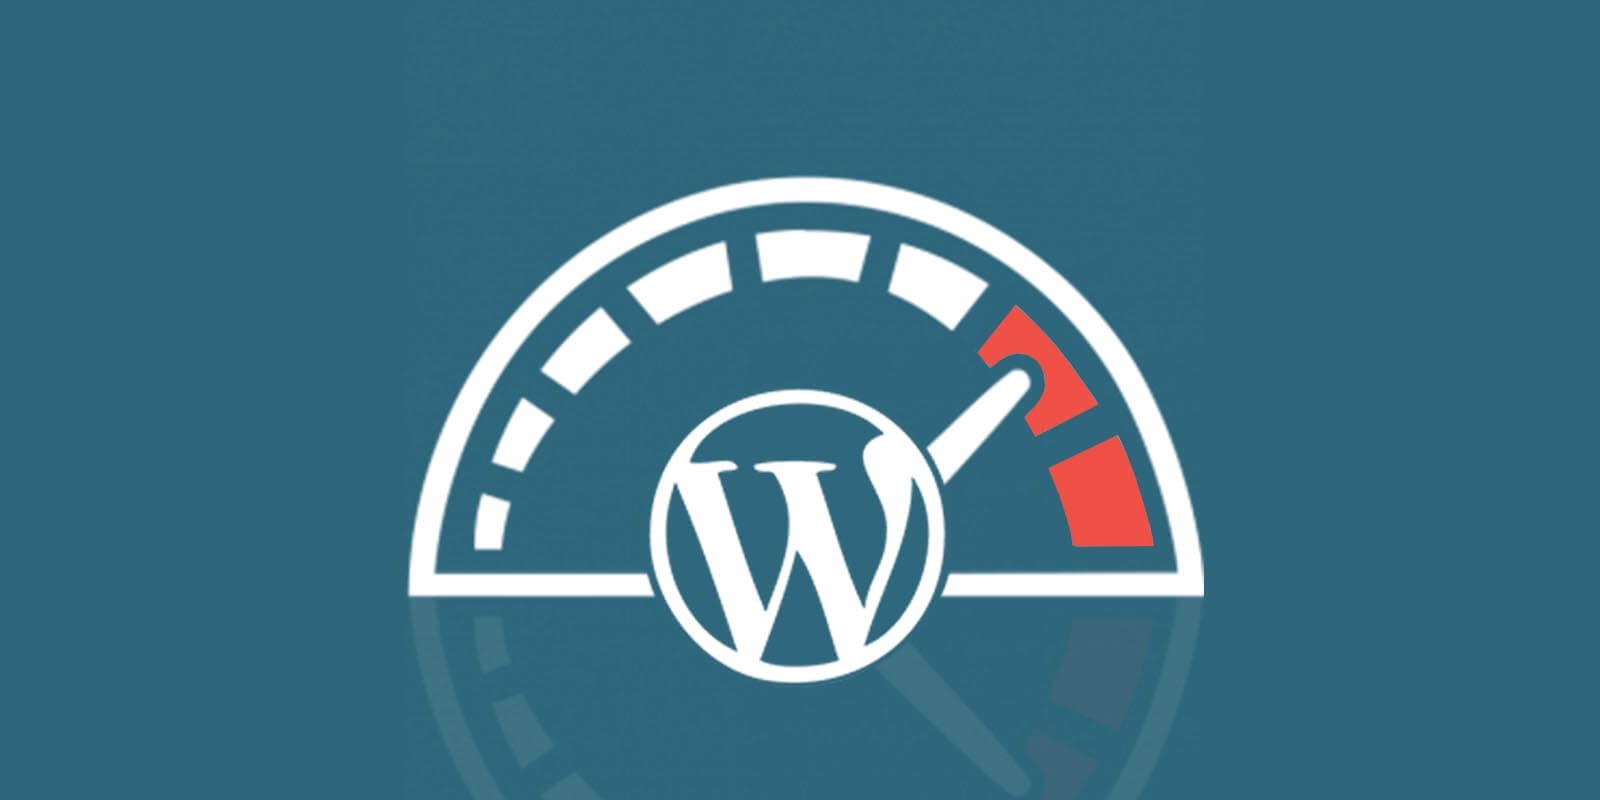 Cómo optimizar WordPress �?? Guía paso a paso 2020